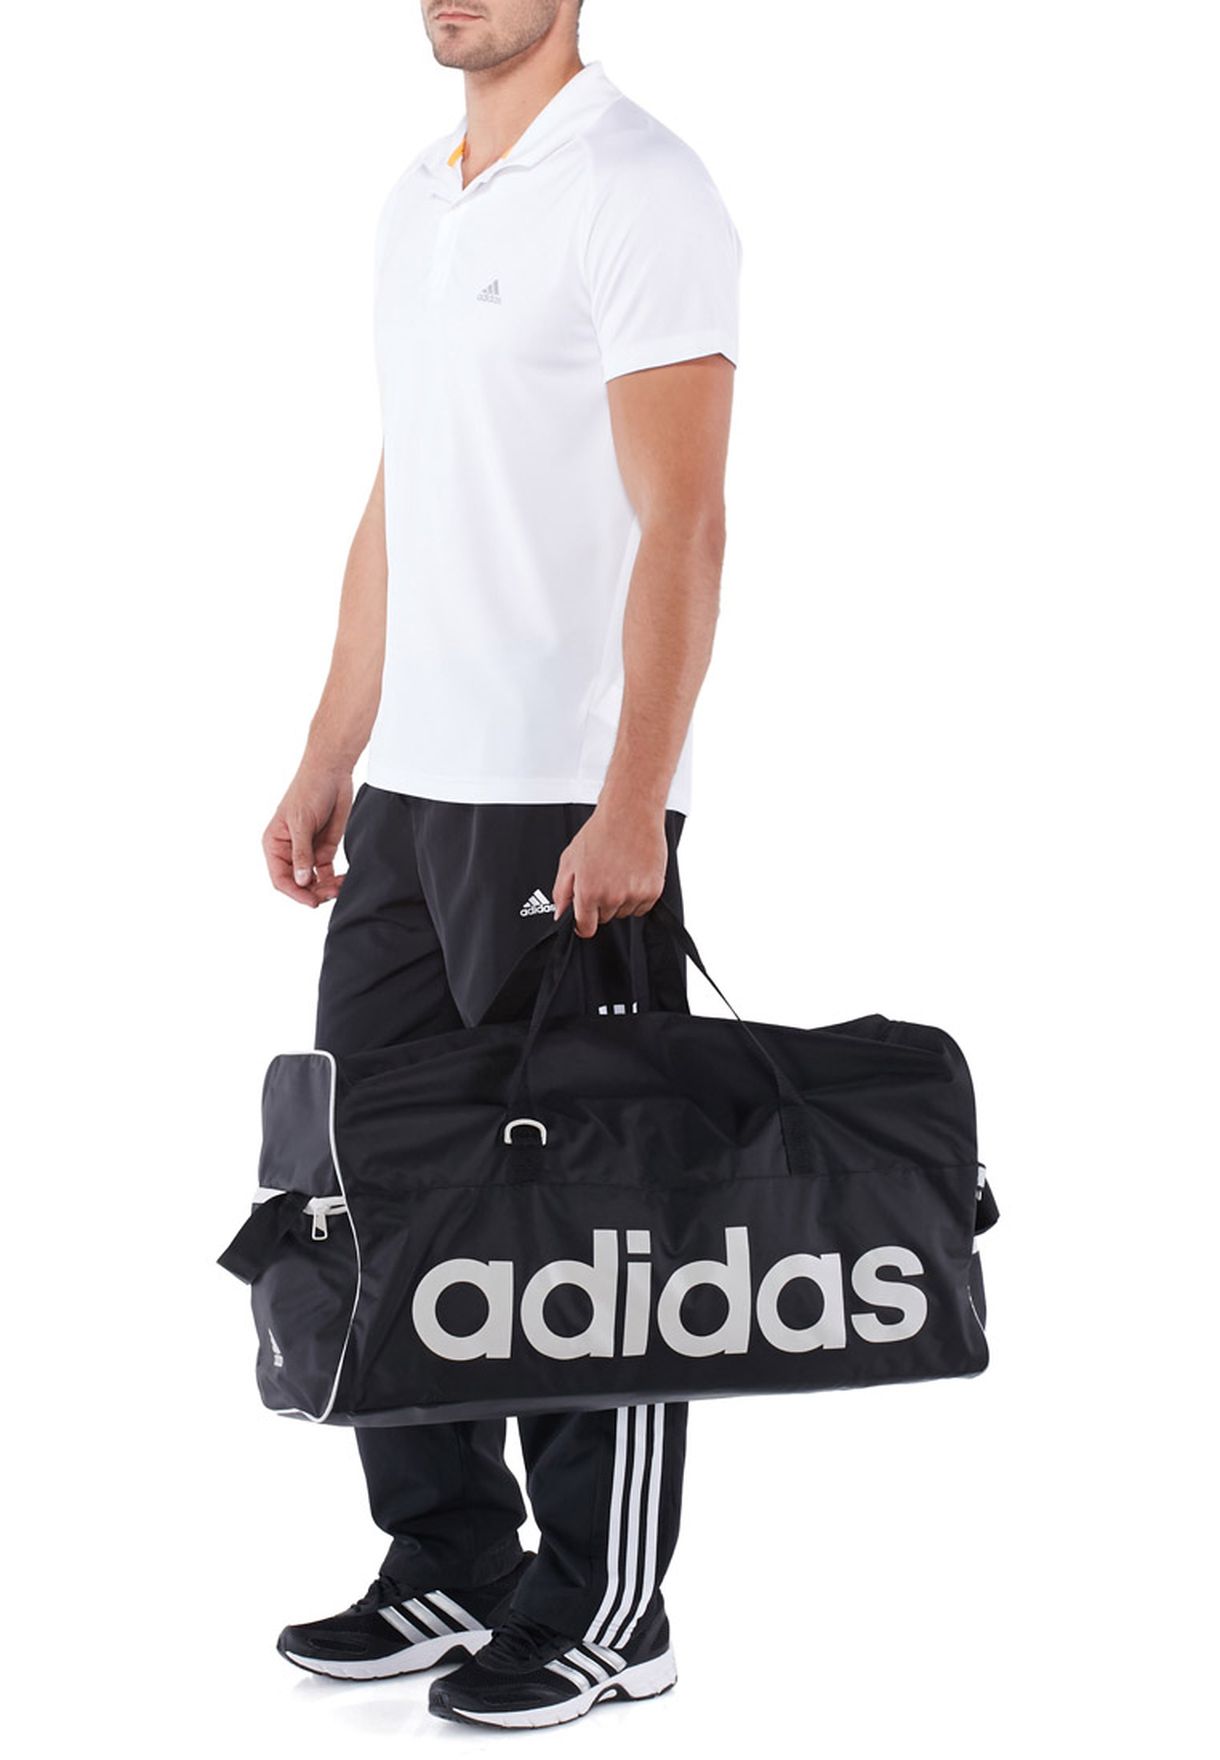 adidas performance duffel bag